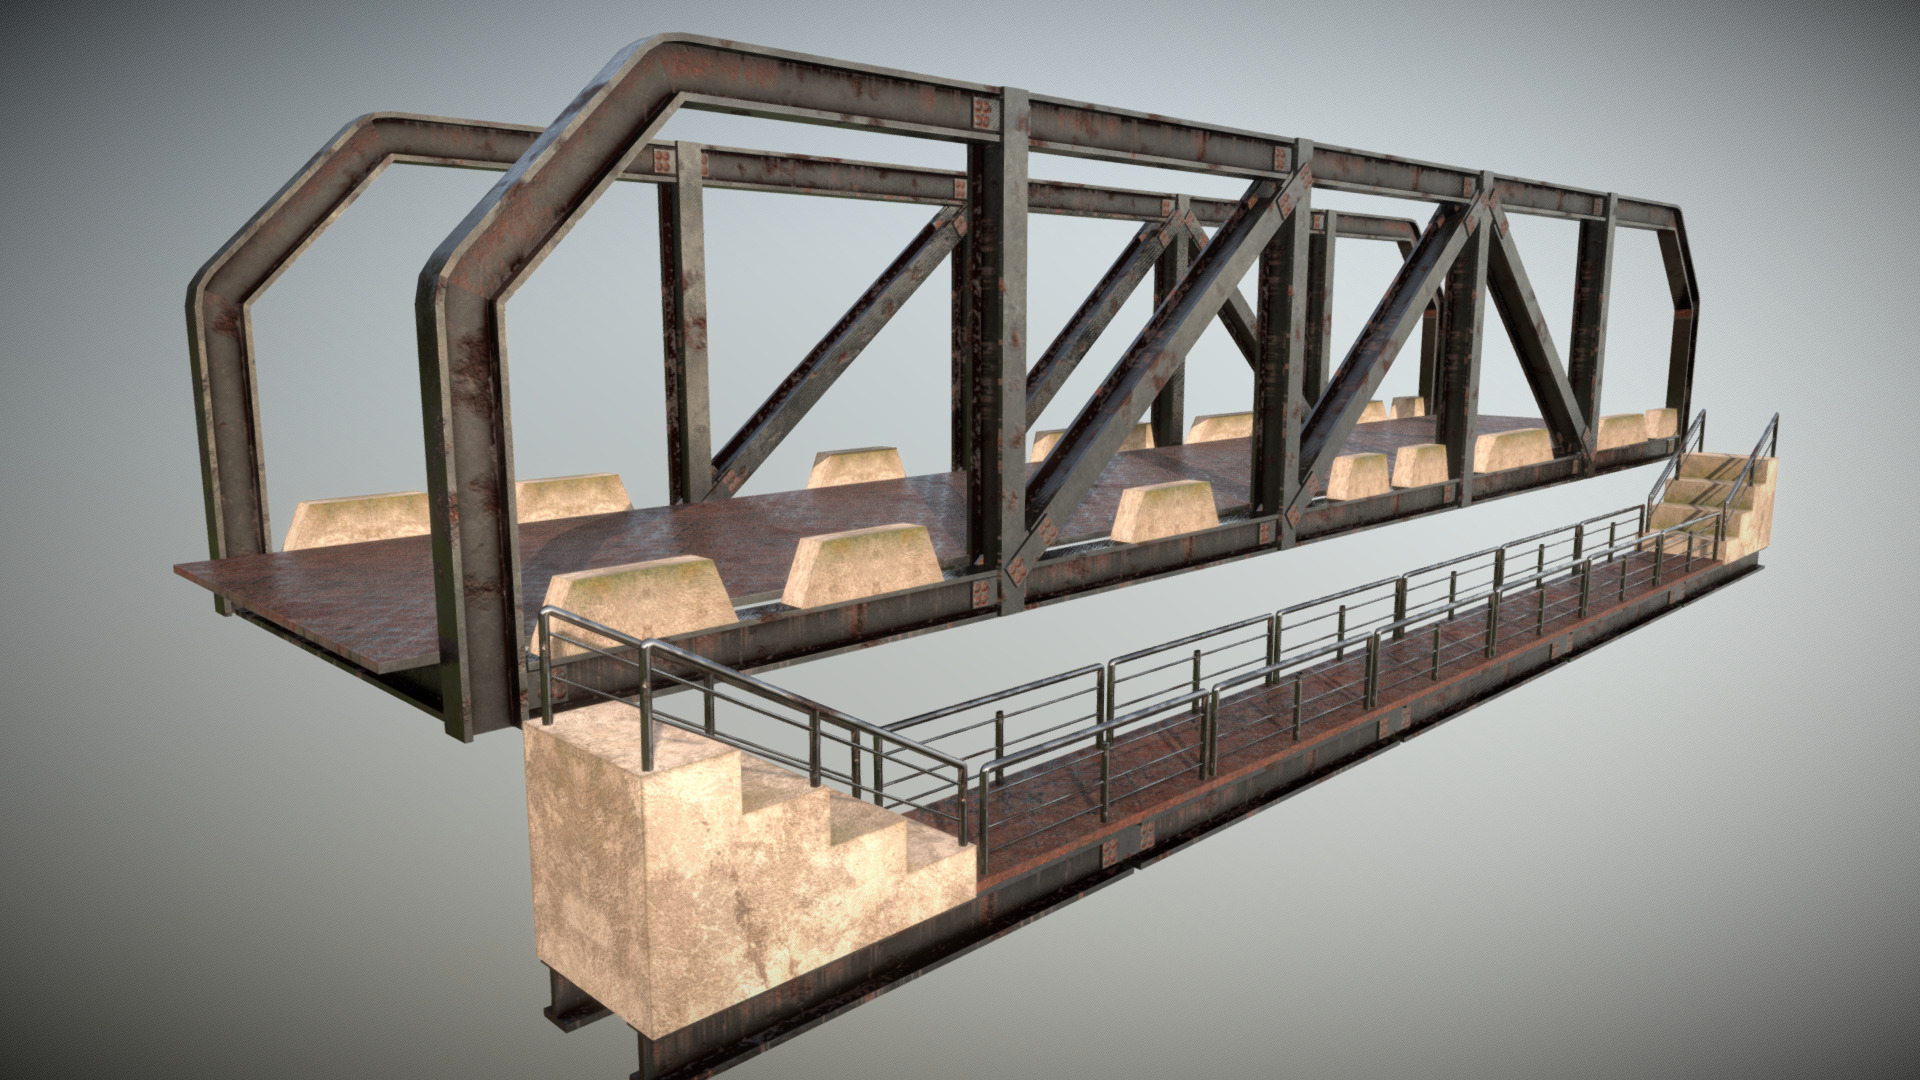 3D model Modular Bridge - This is a 3D model of the Modular Bridge. The 3D model is about a wooden bridge over water.